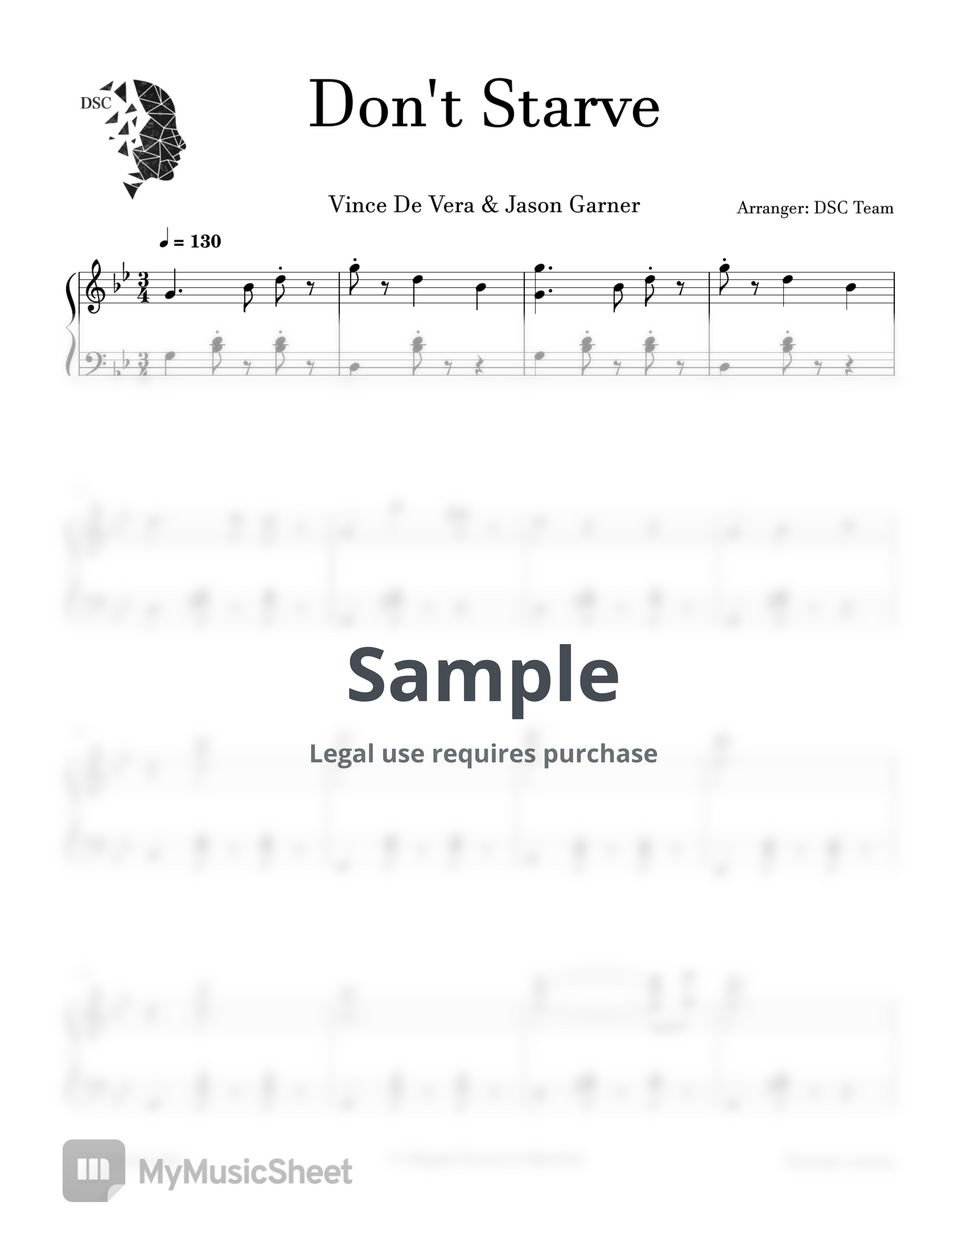 Vince De Vera & Jason Garner - Main (OST Don't Starve) by Digital Scores Collection